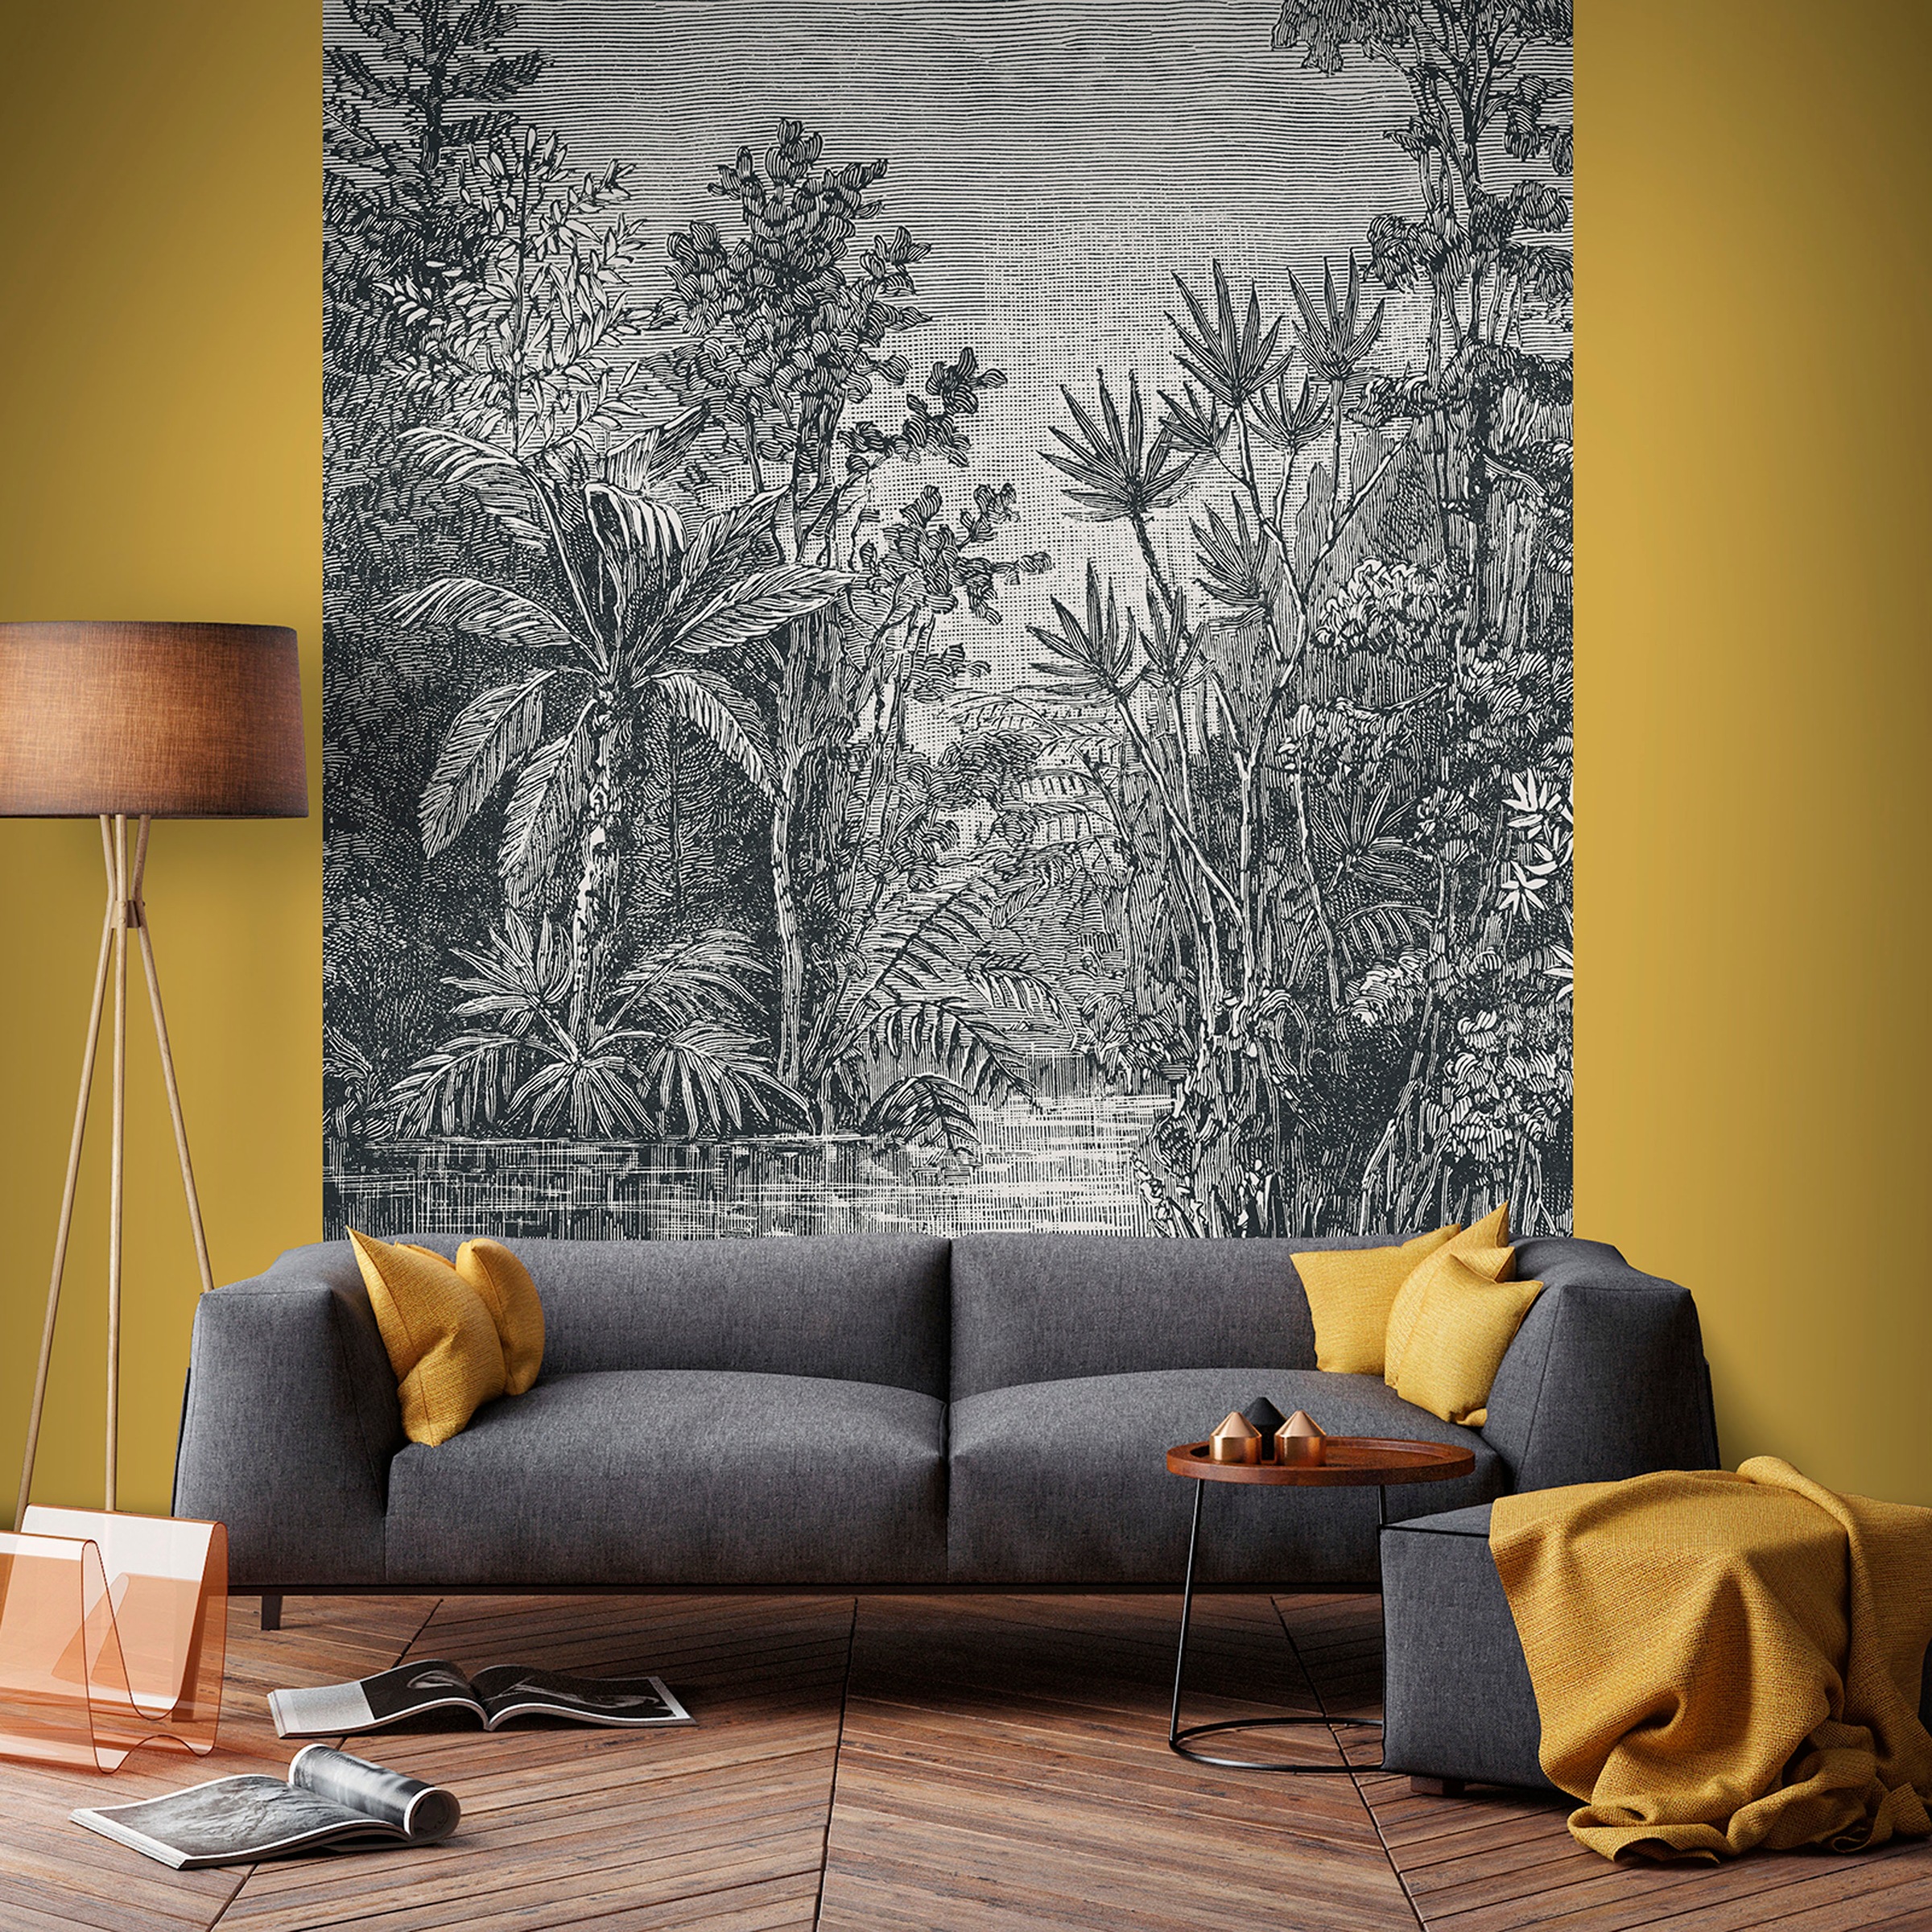 Art for the home Fototapete »Jungle«, 200 cm Länge